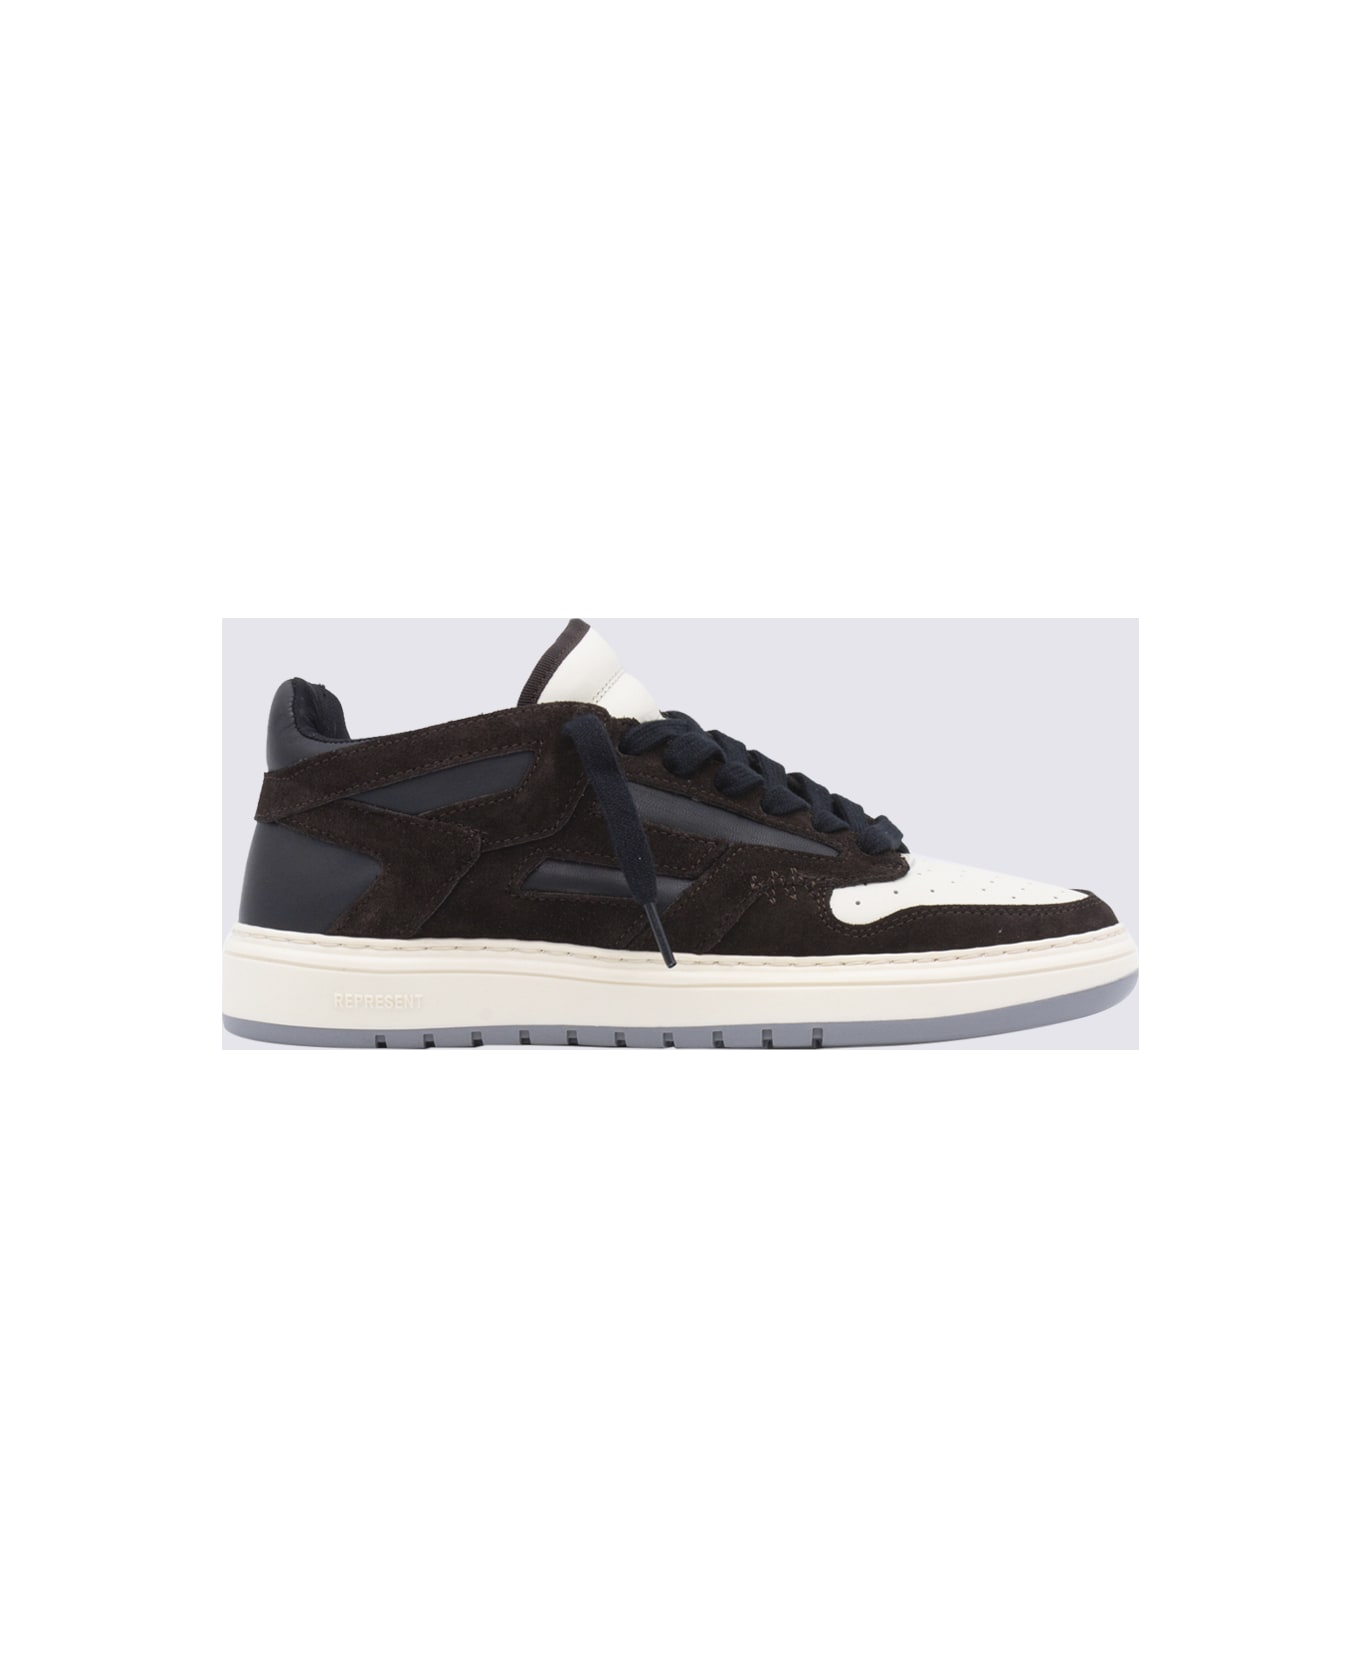 REPRESENT Brown-black Leather Sneakers - BROWN/BLACK スニーカー